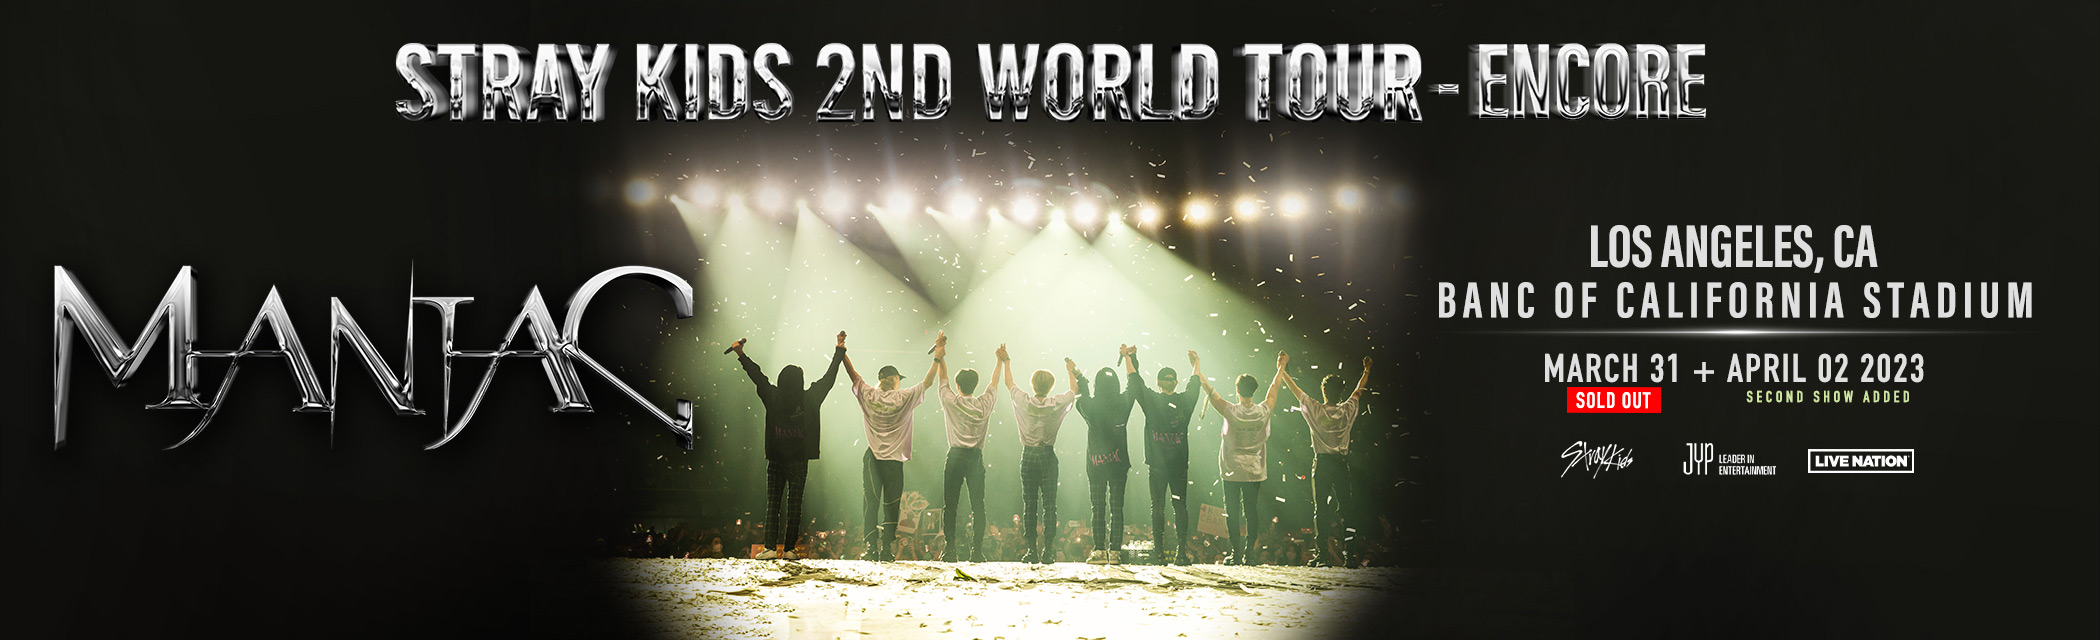 2nd World Tour "MANIAC" - ENCORE